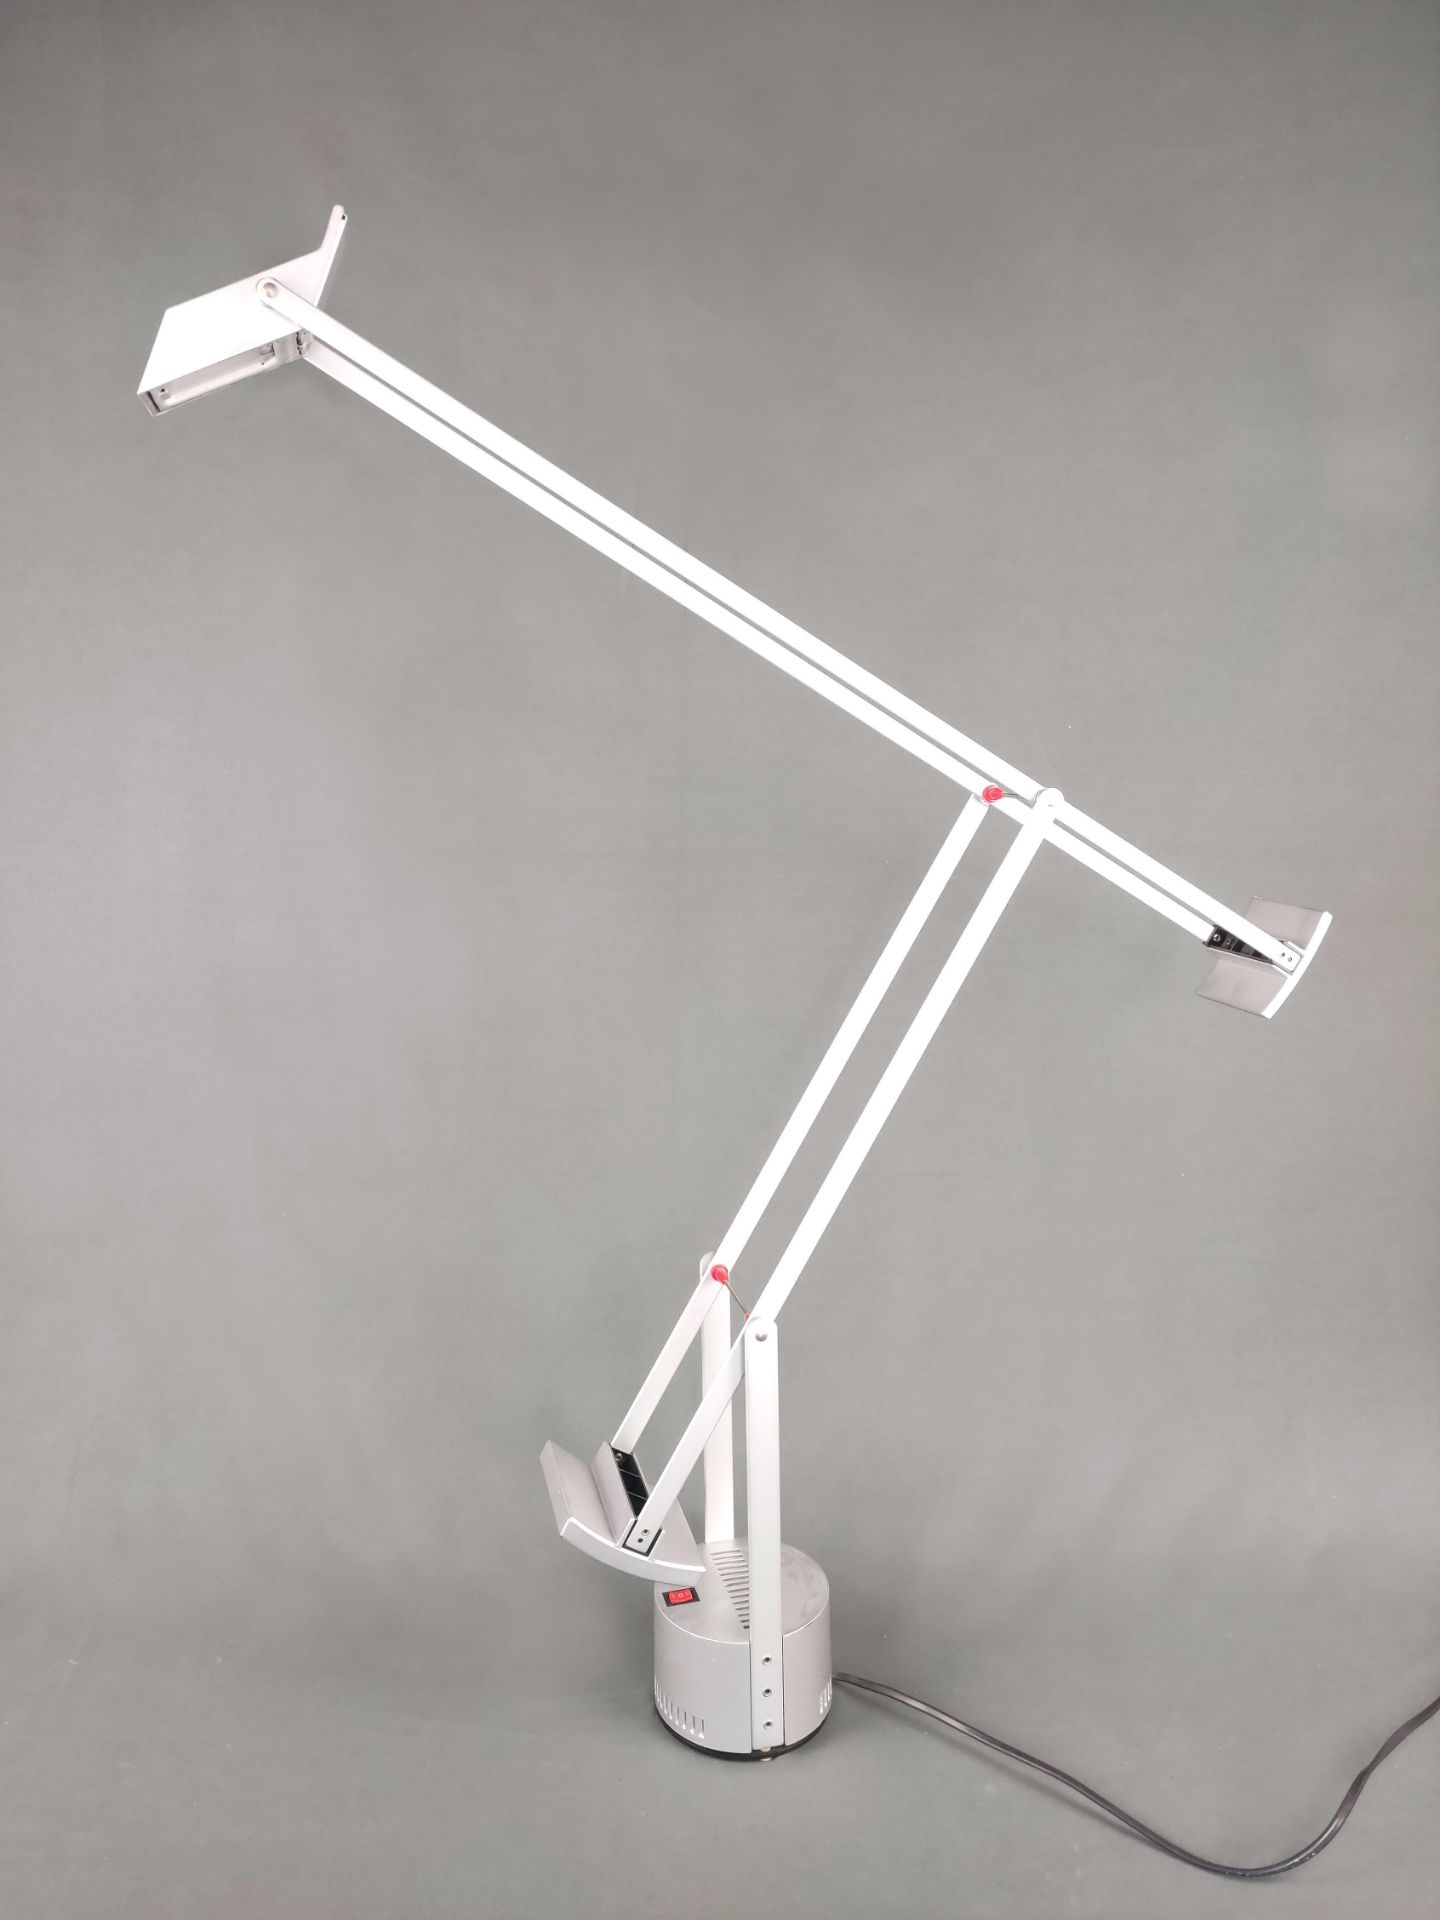 Vintage design lamp "Tizio", Artemide, design 1970s by Richard Sapper (1932 Munich-2015 Milan), ann